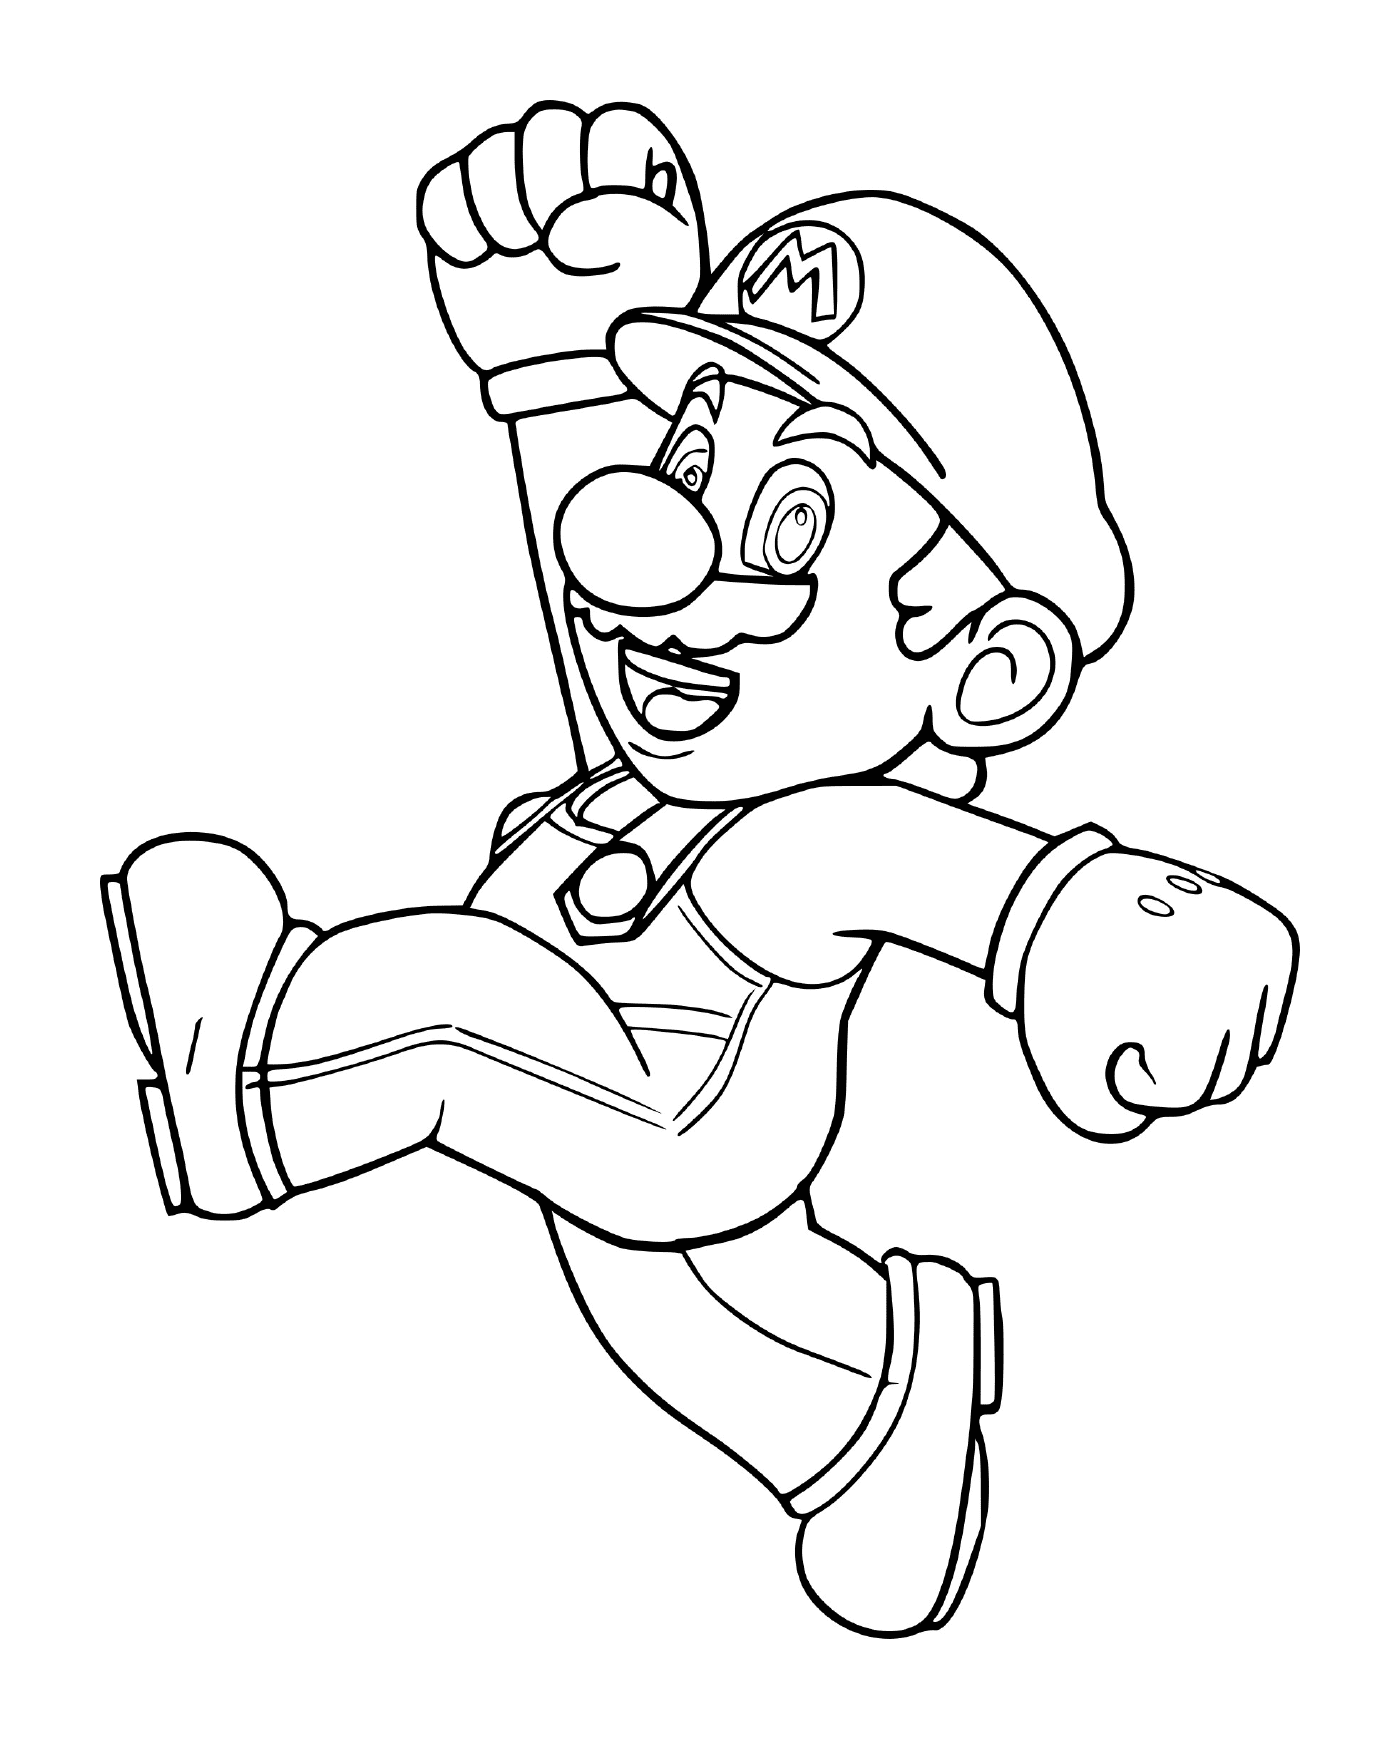  Mario Bros original, a man running 